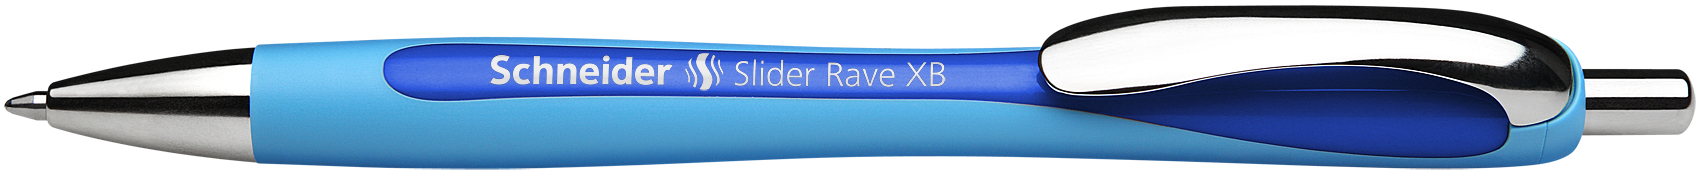 SCHNEIDER Stylo à bille Rave 0.7mm 132503 bleu, refill.